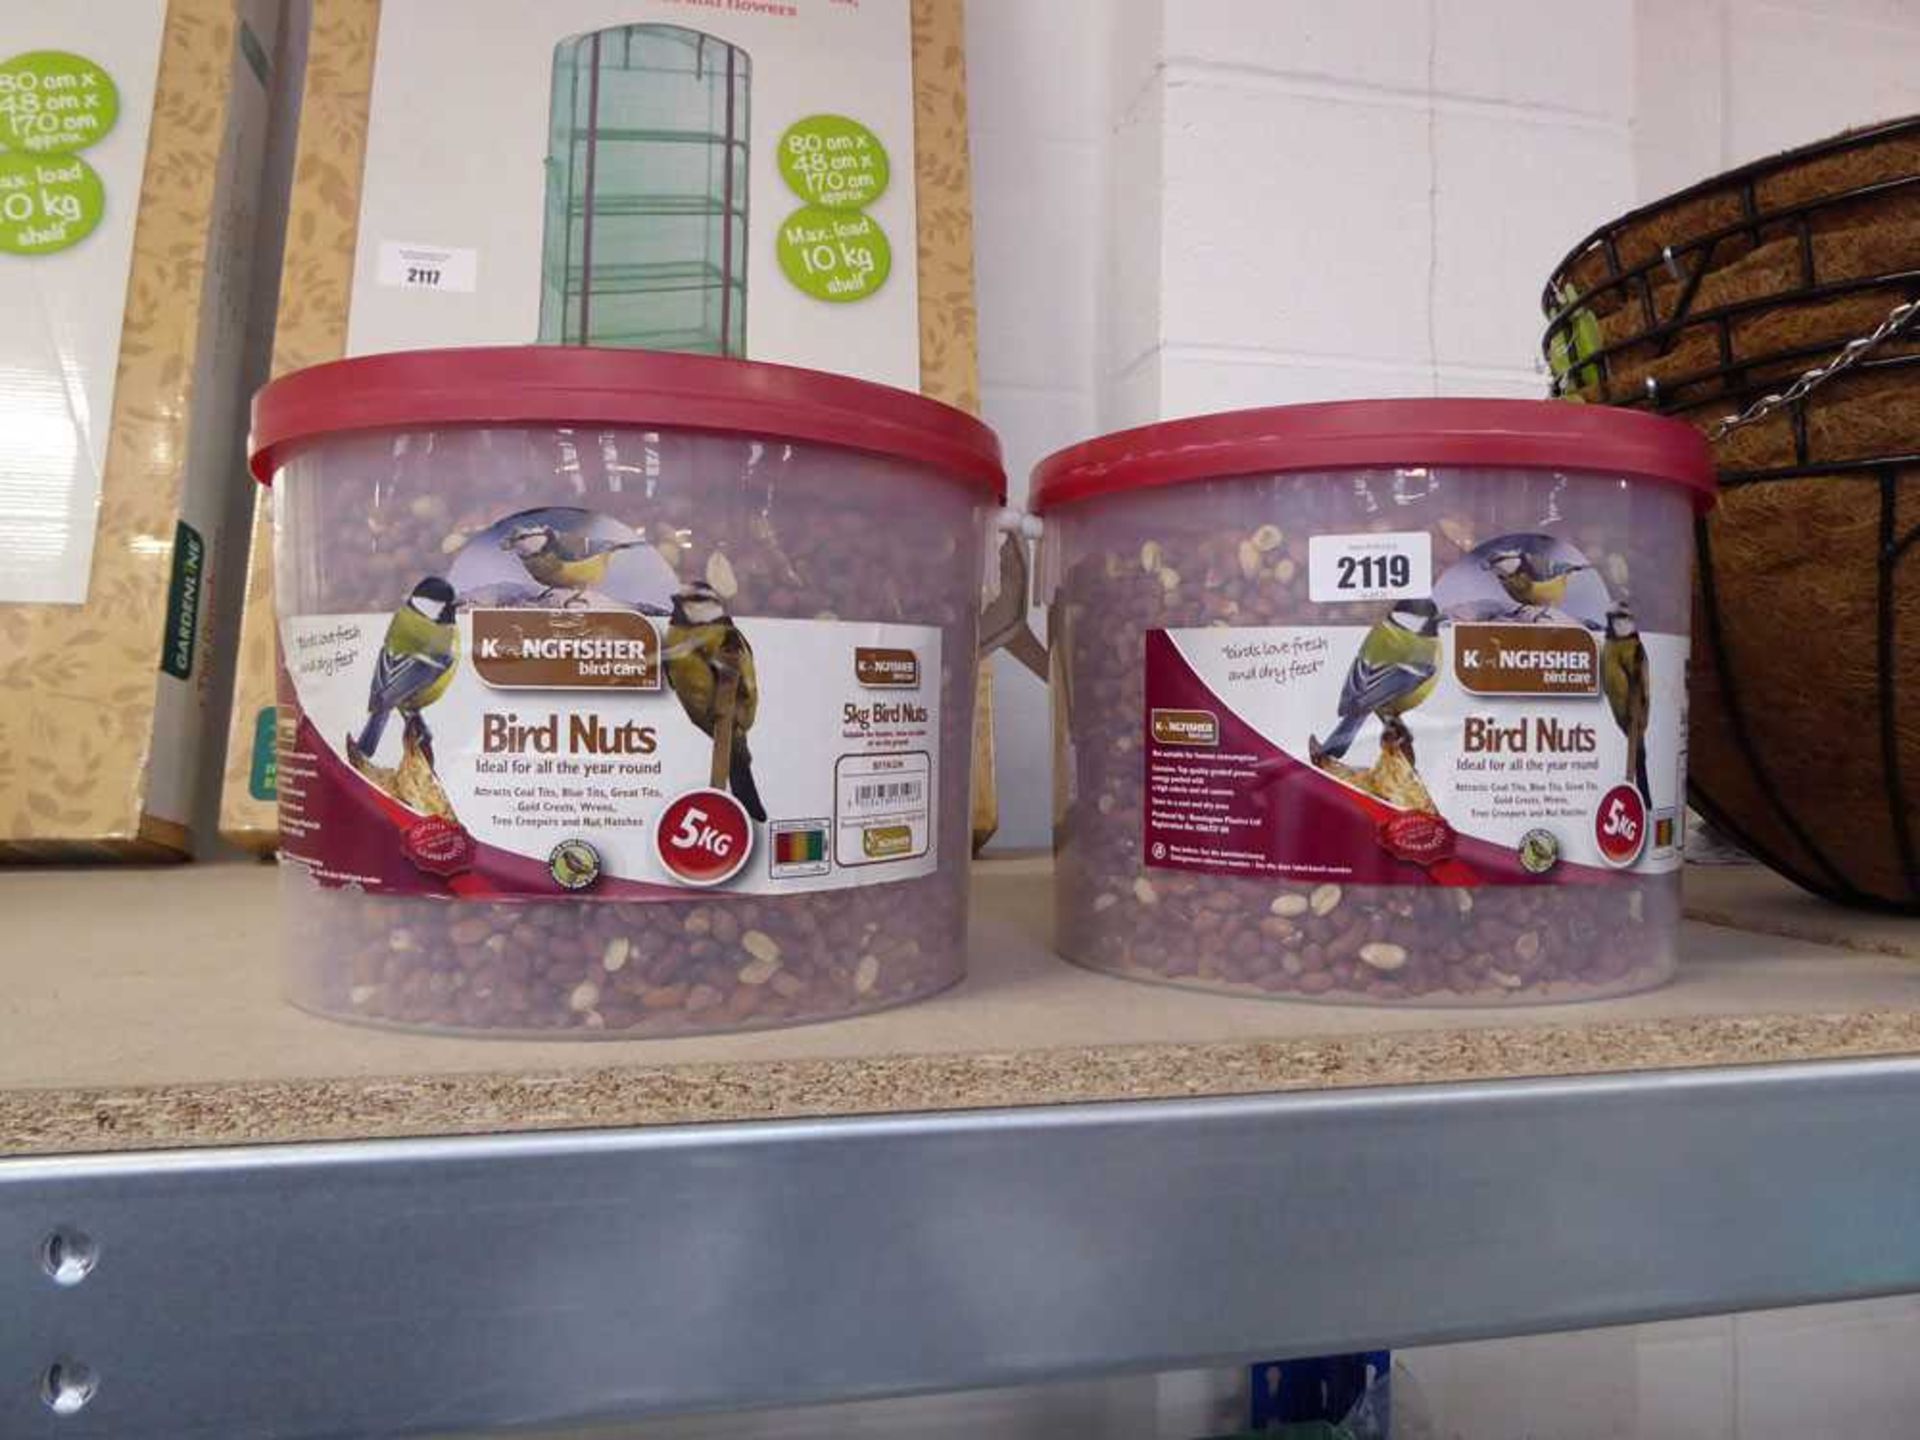 2 5kg tubs of bird nuts